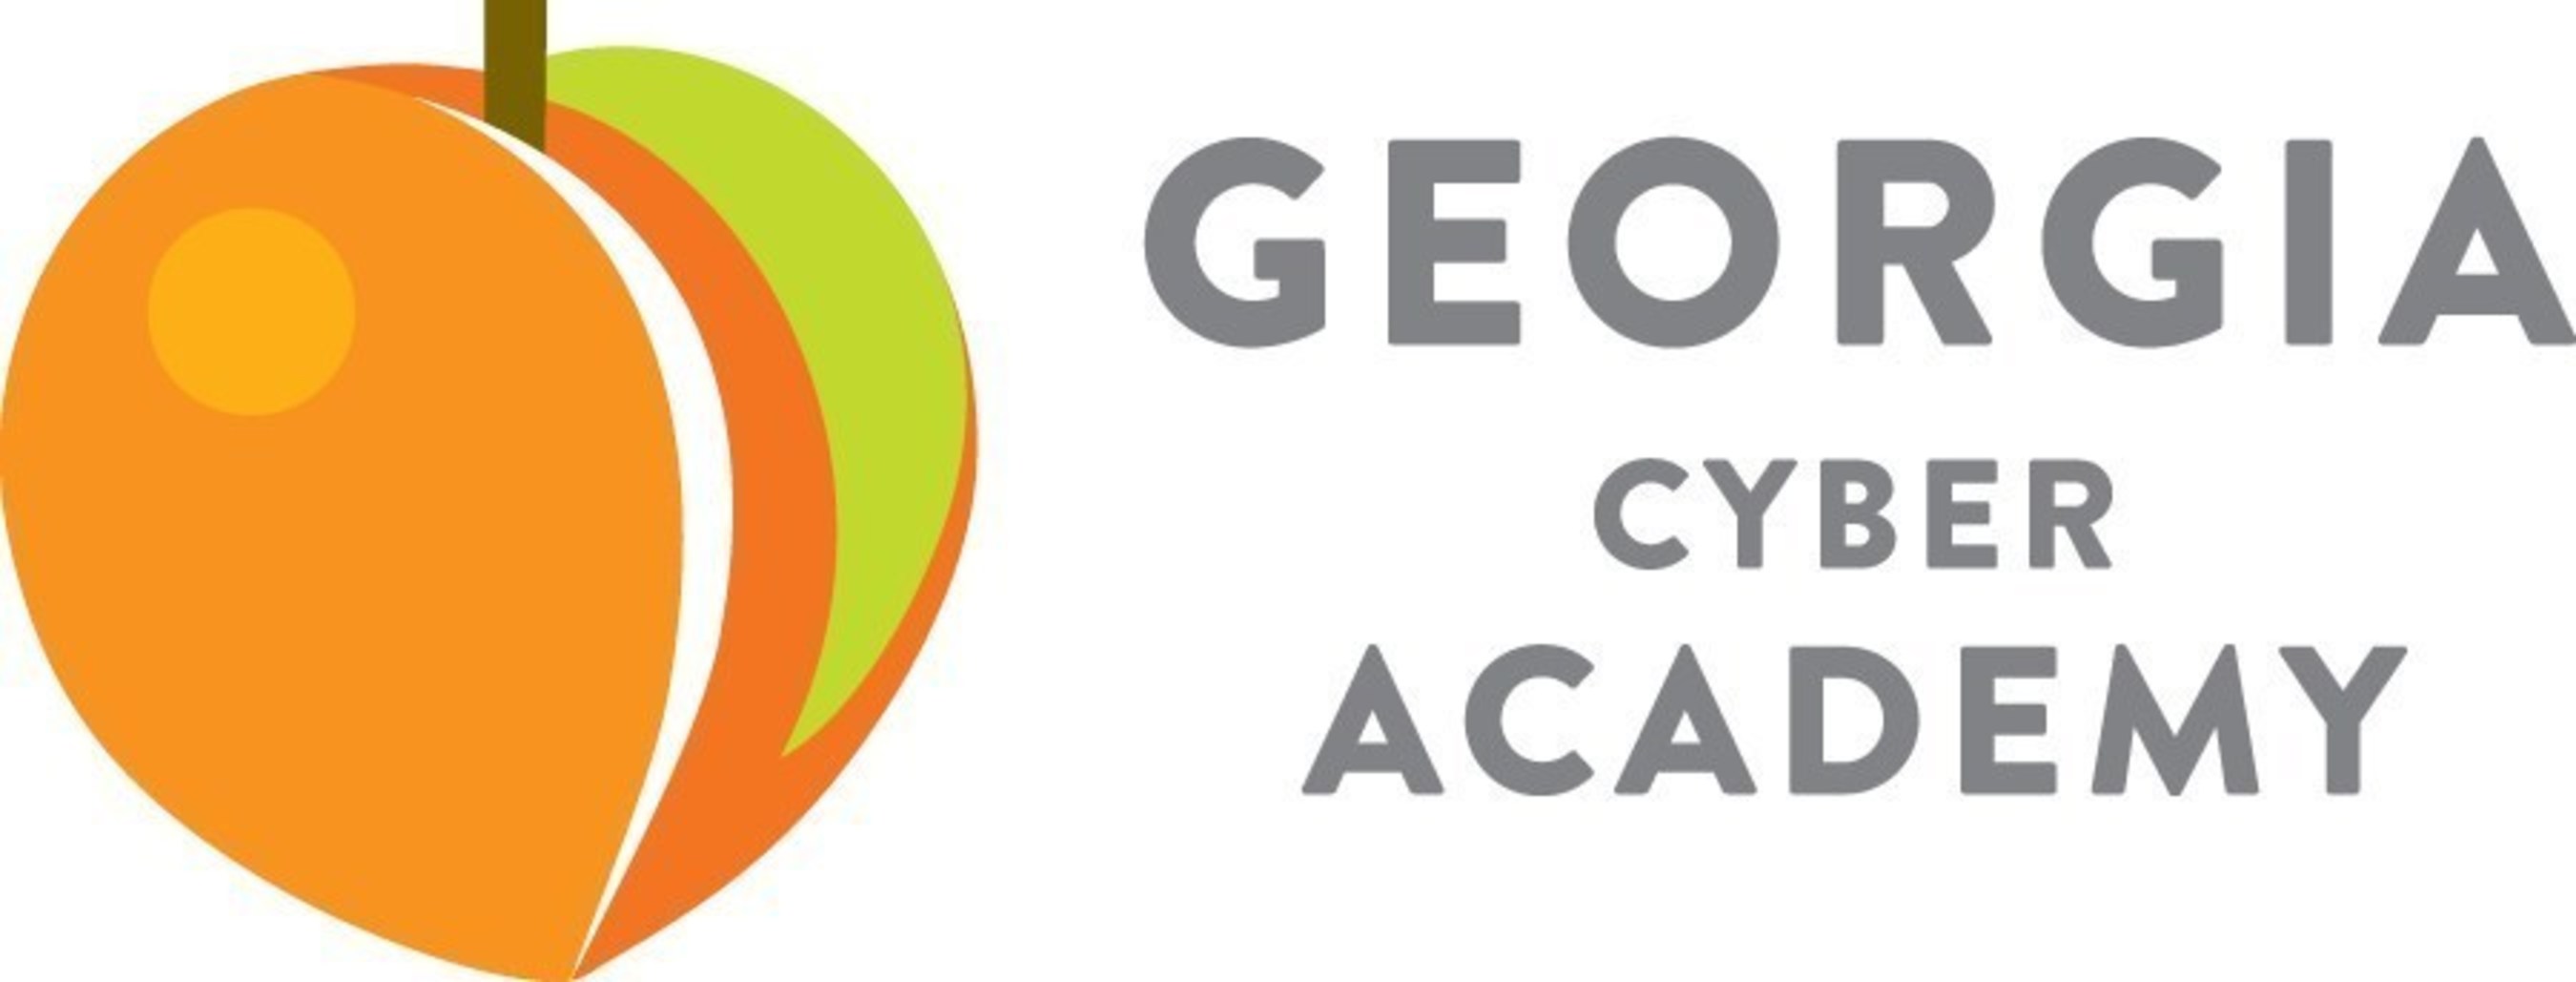 Georgia Cyber Academy